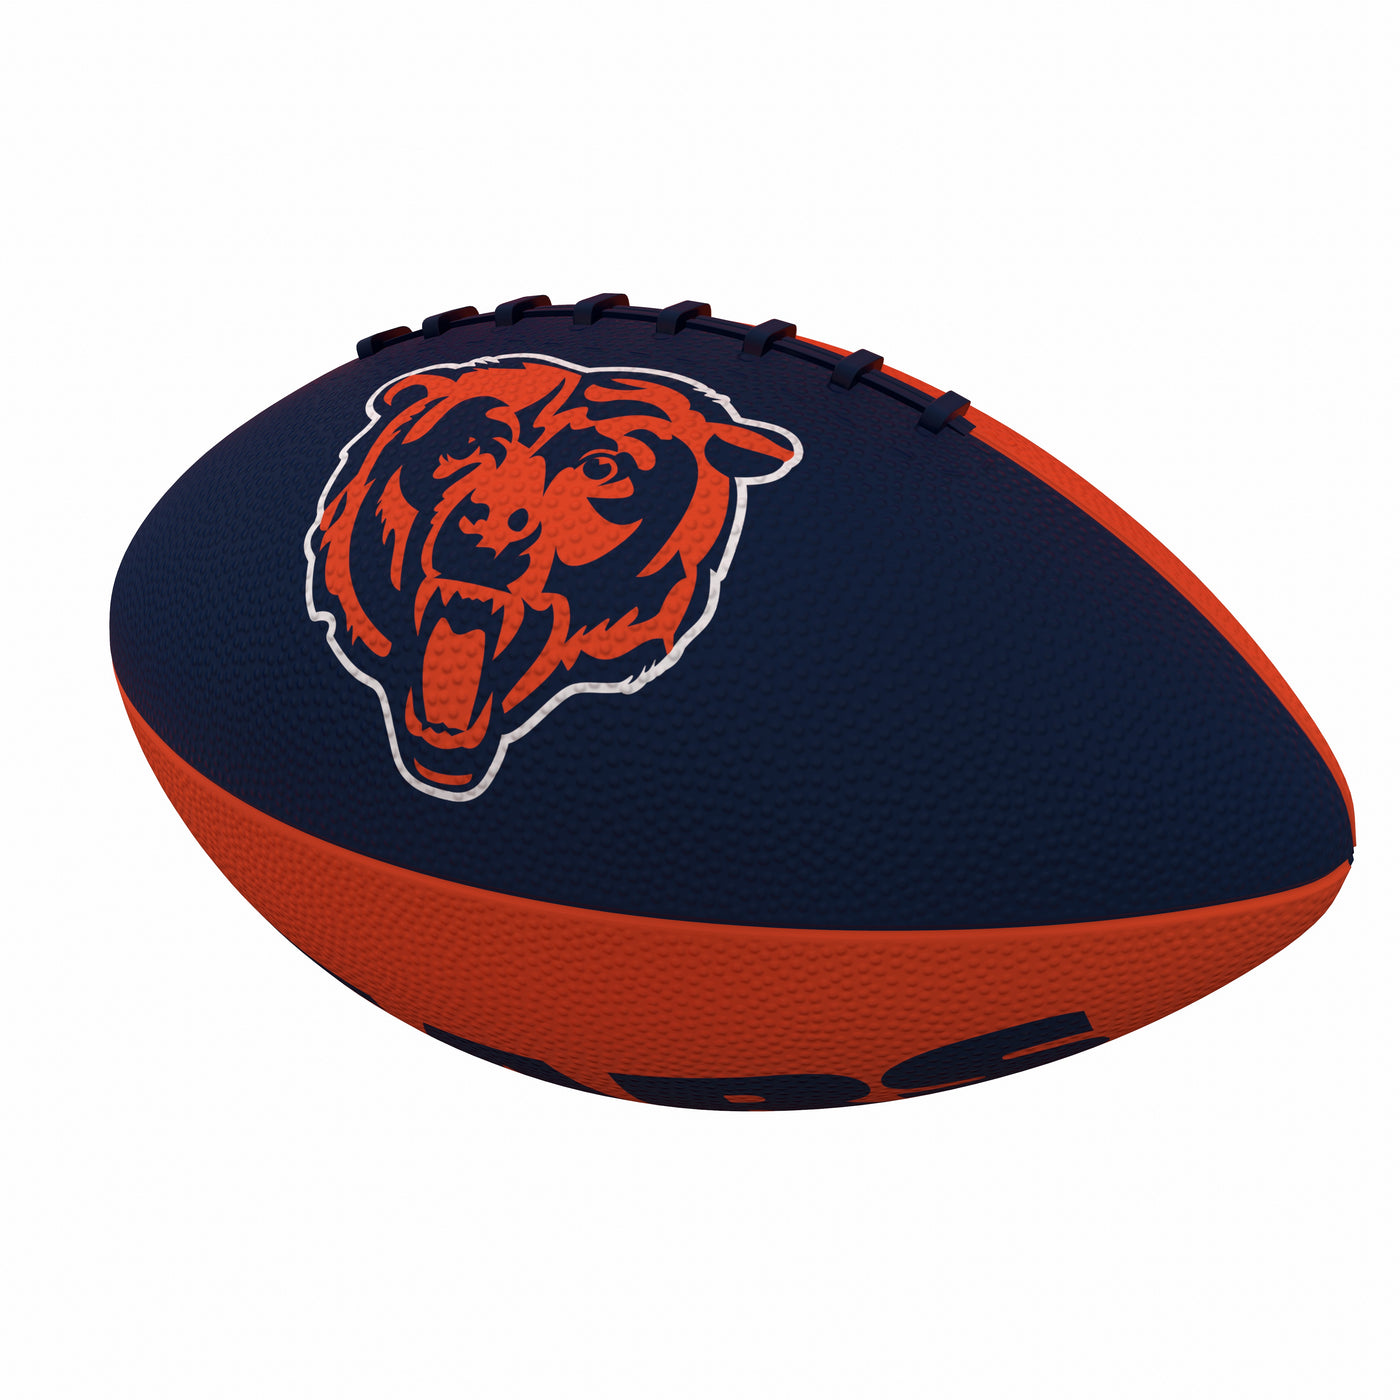 Chicago Bears Pinwheel Logo Junior-Size Rubber Football